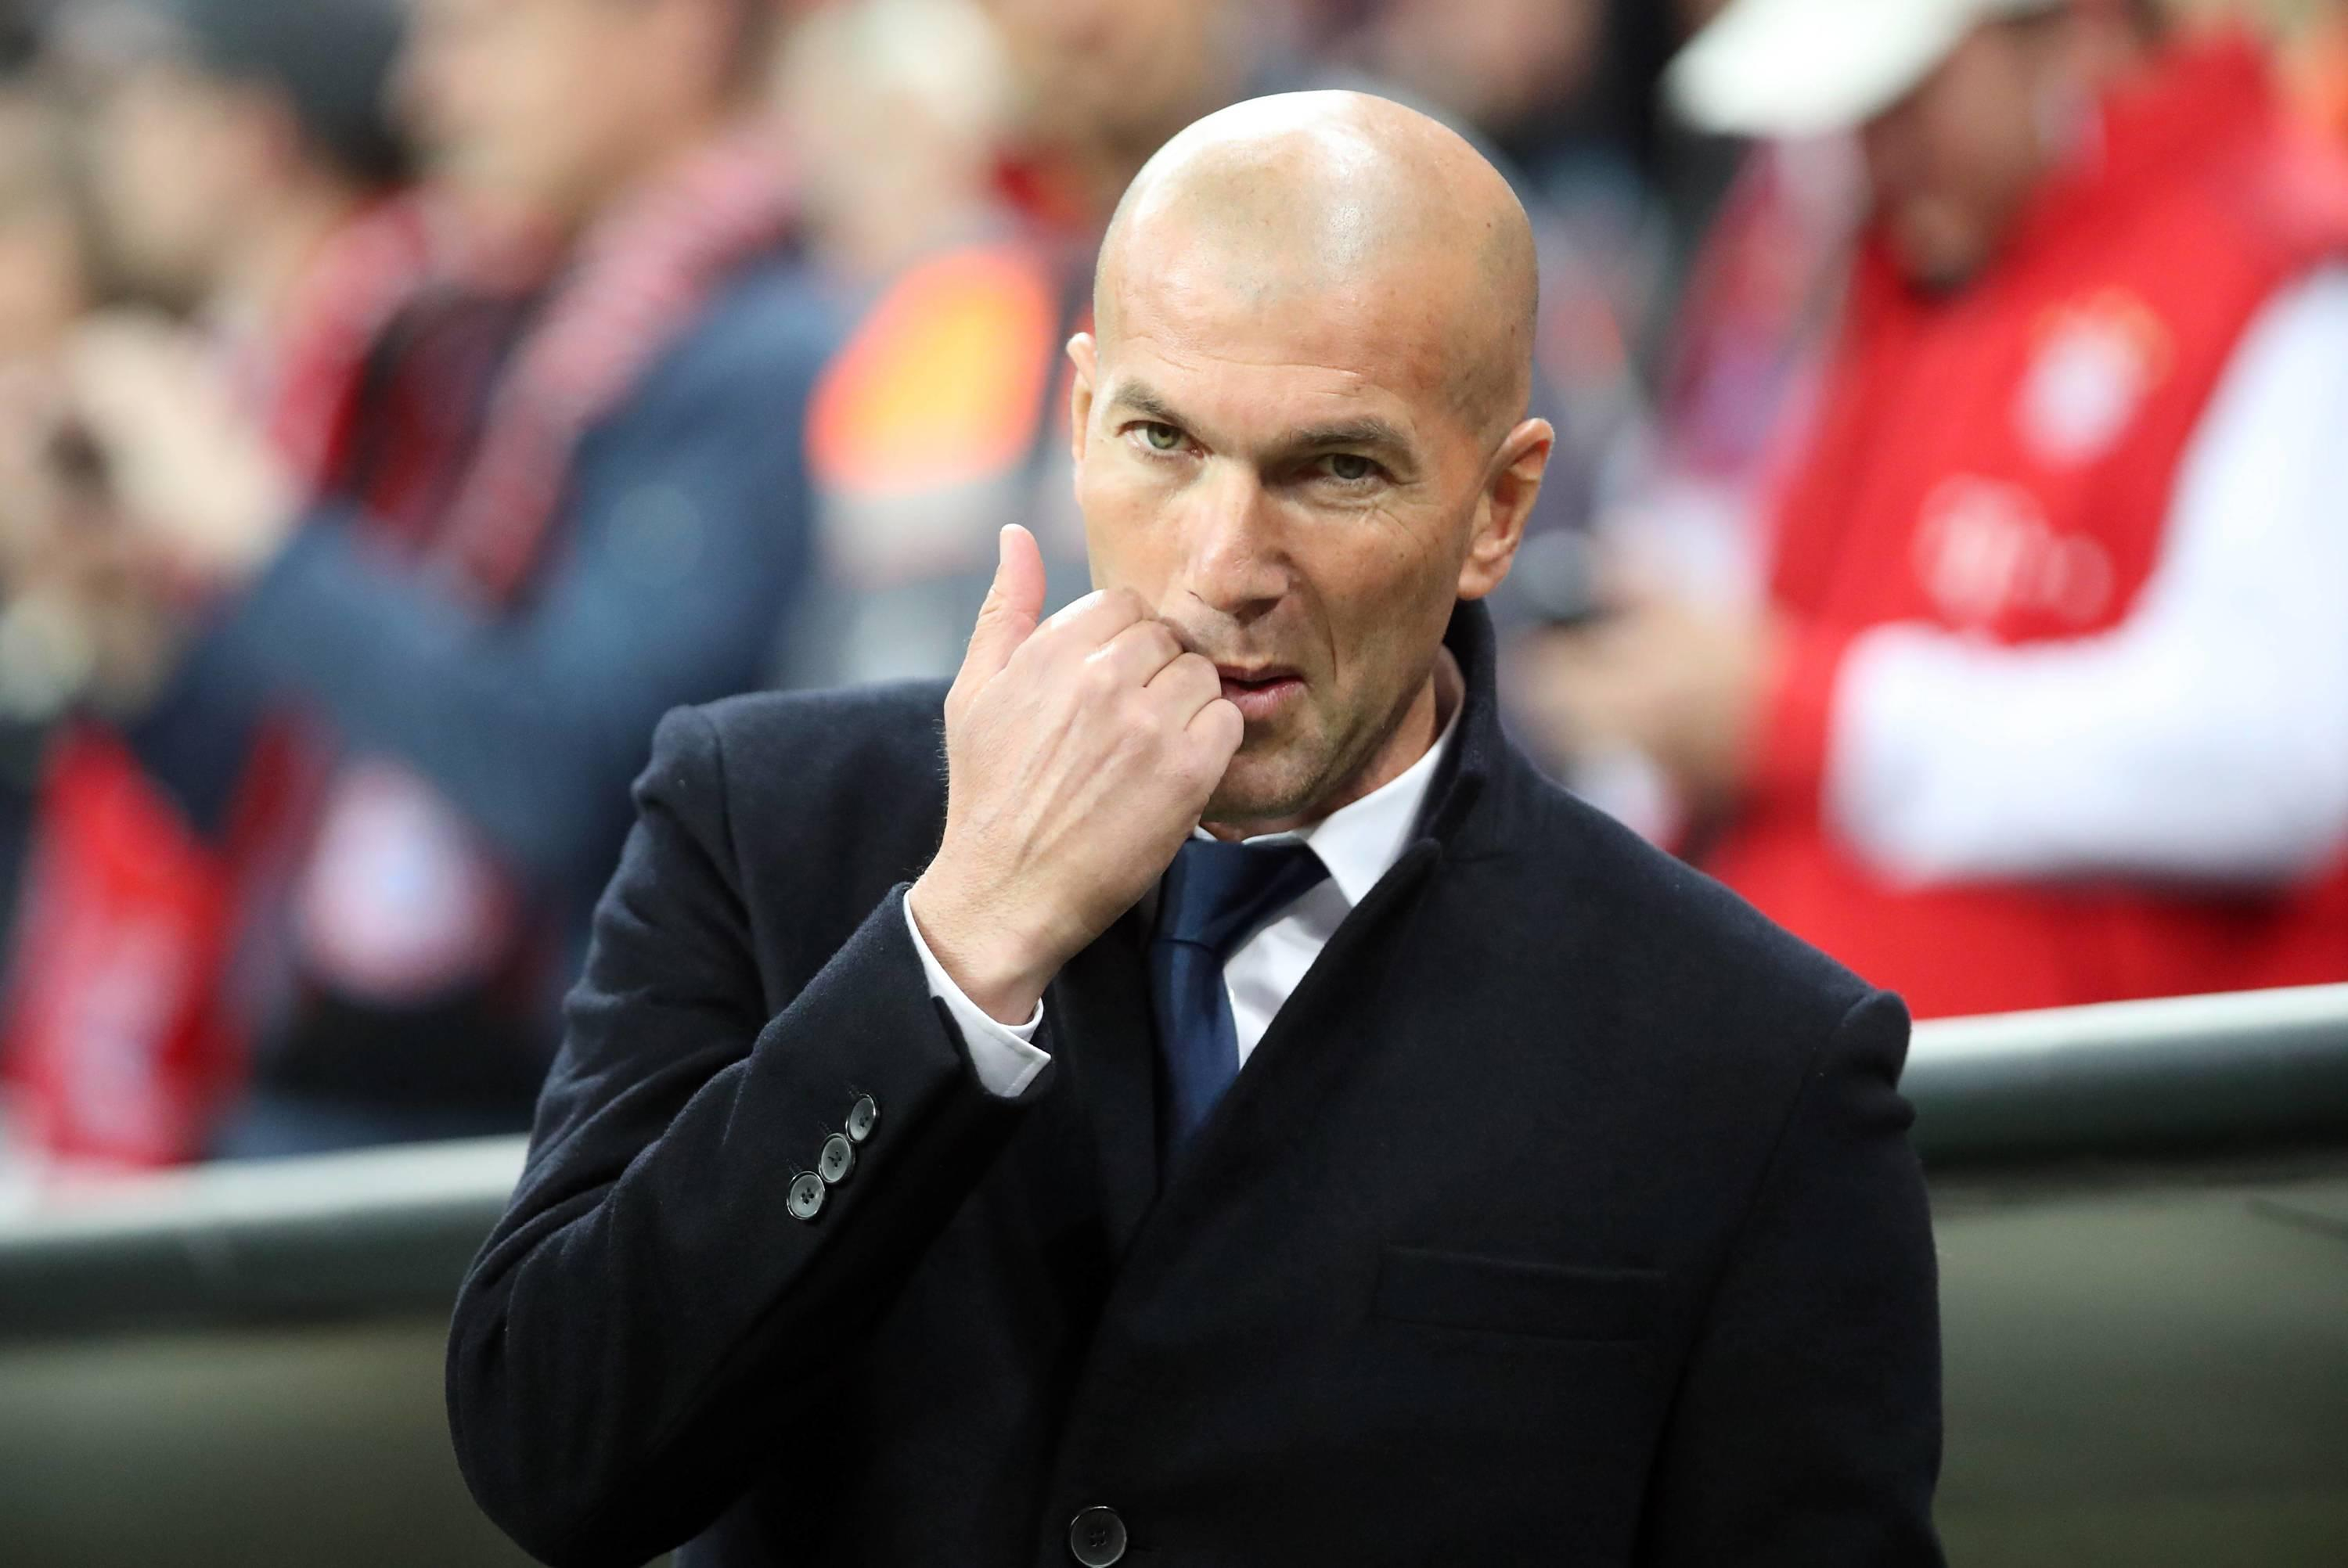 Mercato: Zidane at Bayern? We'll talk about it again, but...